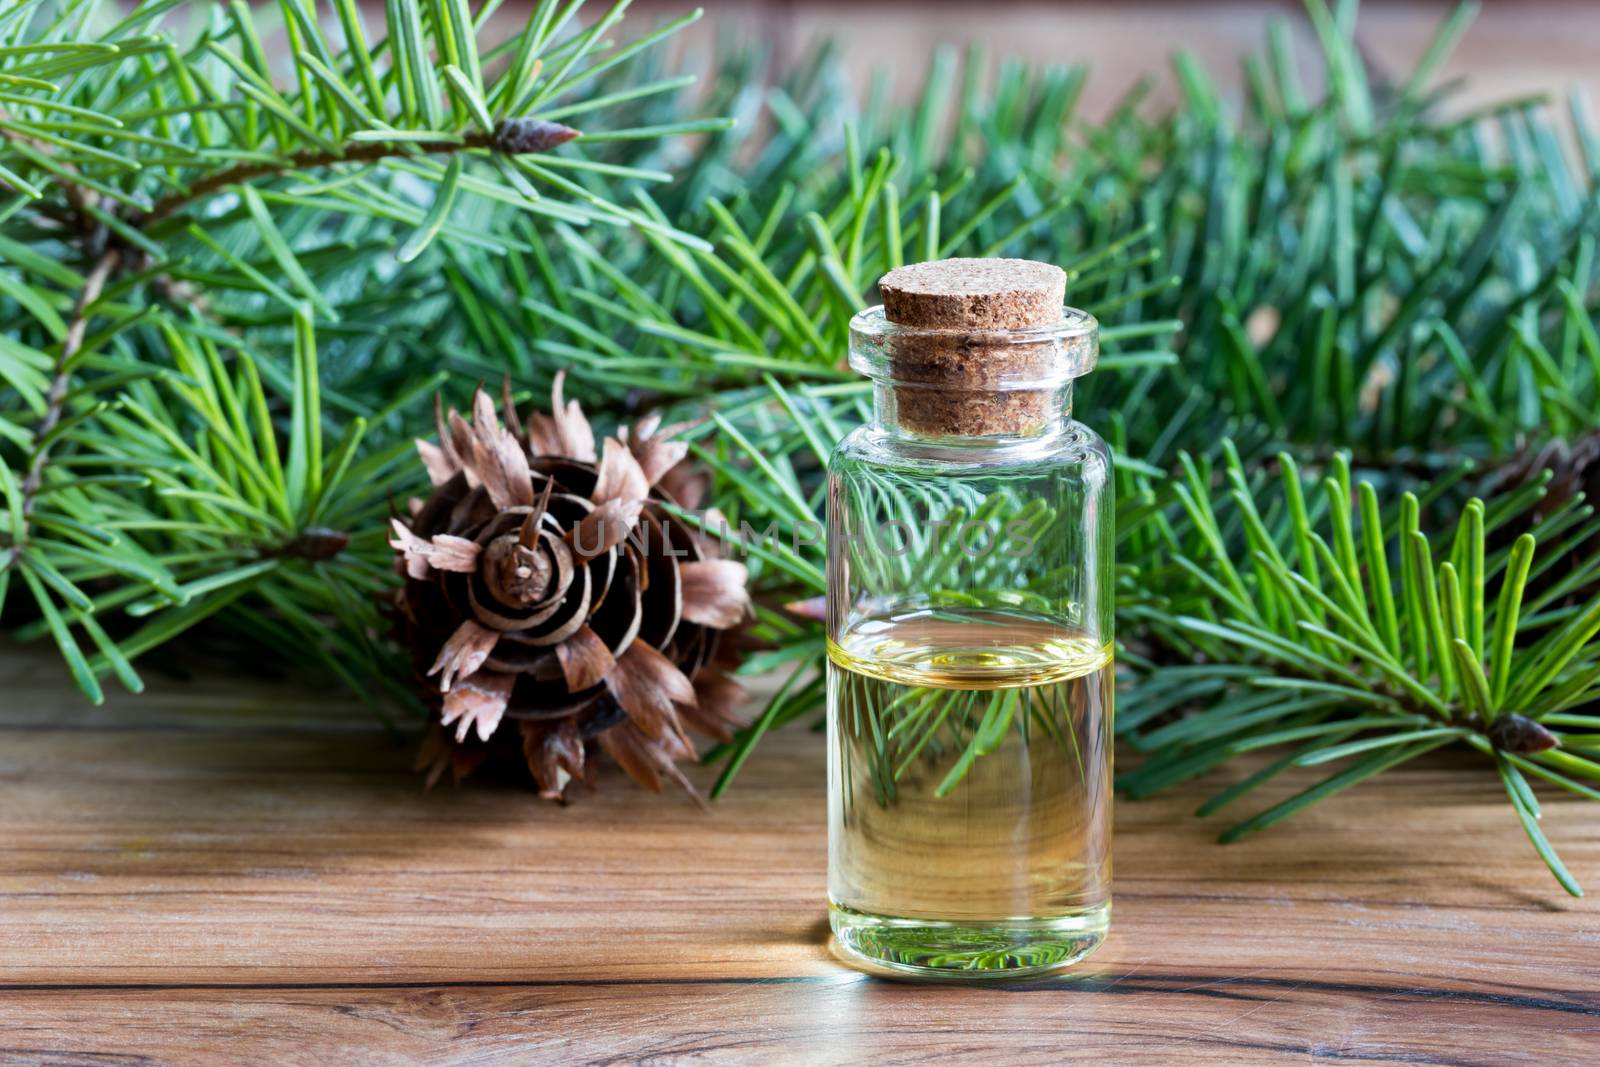 A bottle of Douglas fir essential oil with young Douglas fir branches